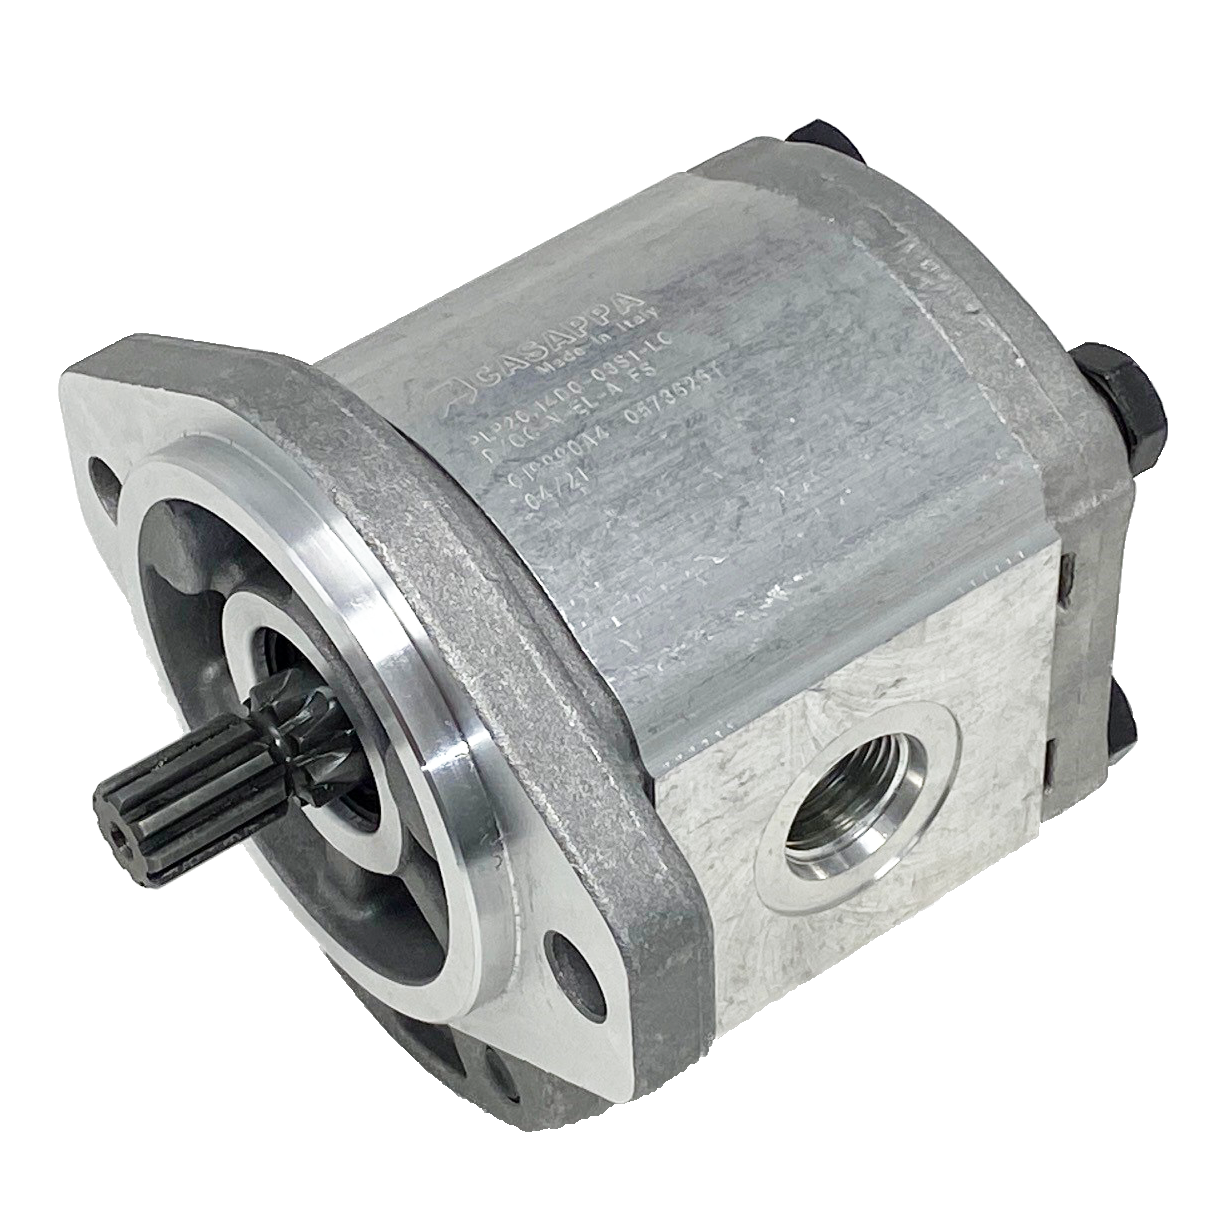 PLM20.20R0-07S1-LOC/OD-N-EL : Casappa Polaris Gear Motor, 21.14cc, 2900psi Rated, 3000RPM, Reversible Rear External Drain, 11T 16/32dp Shaft, SAE A 2-Bolt Flange, 0.625 (5/8") #10 SAE Inlet, 0.75 (3/4") #12 SAE Outlet, Aluminum Body & Flange